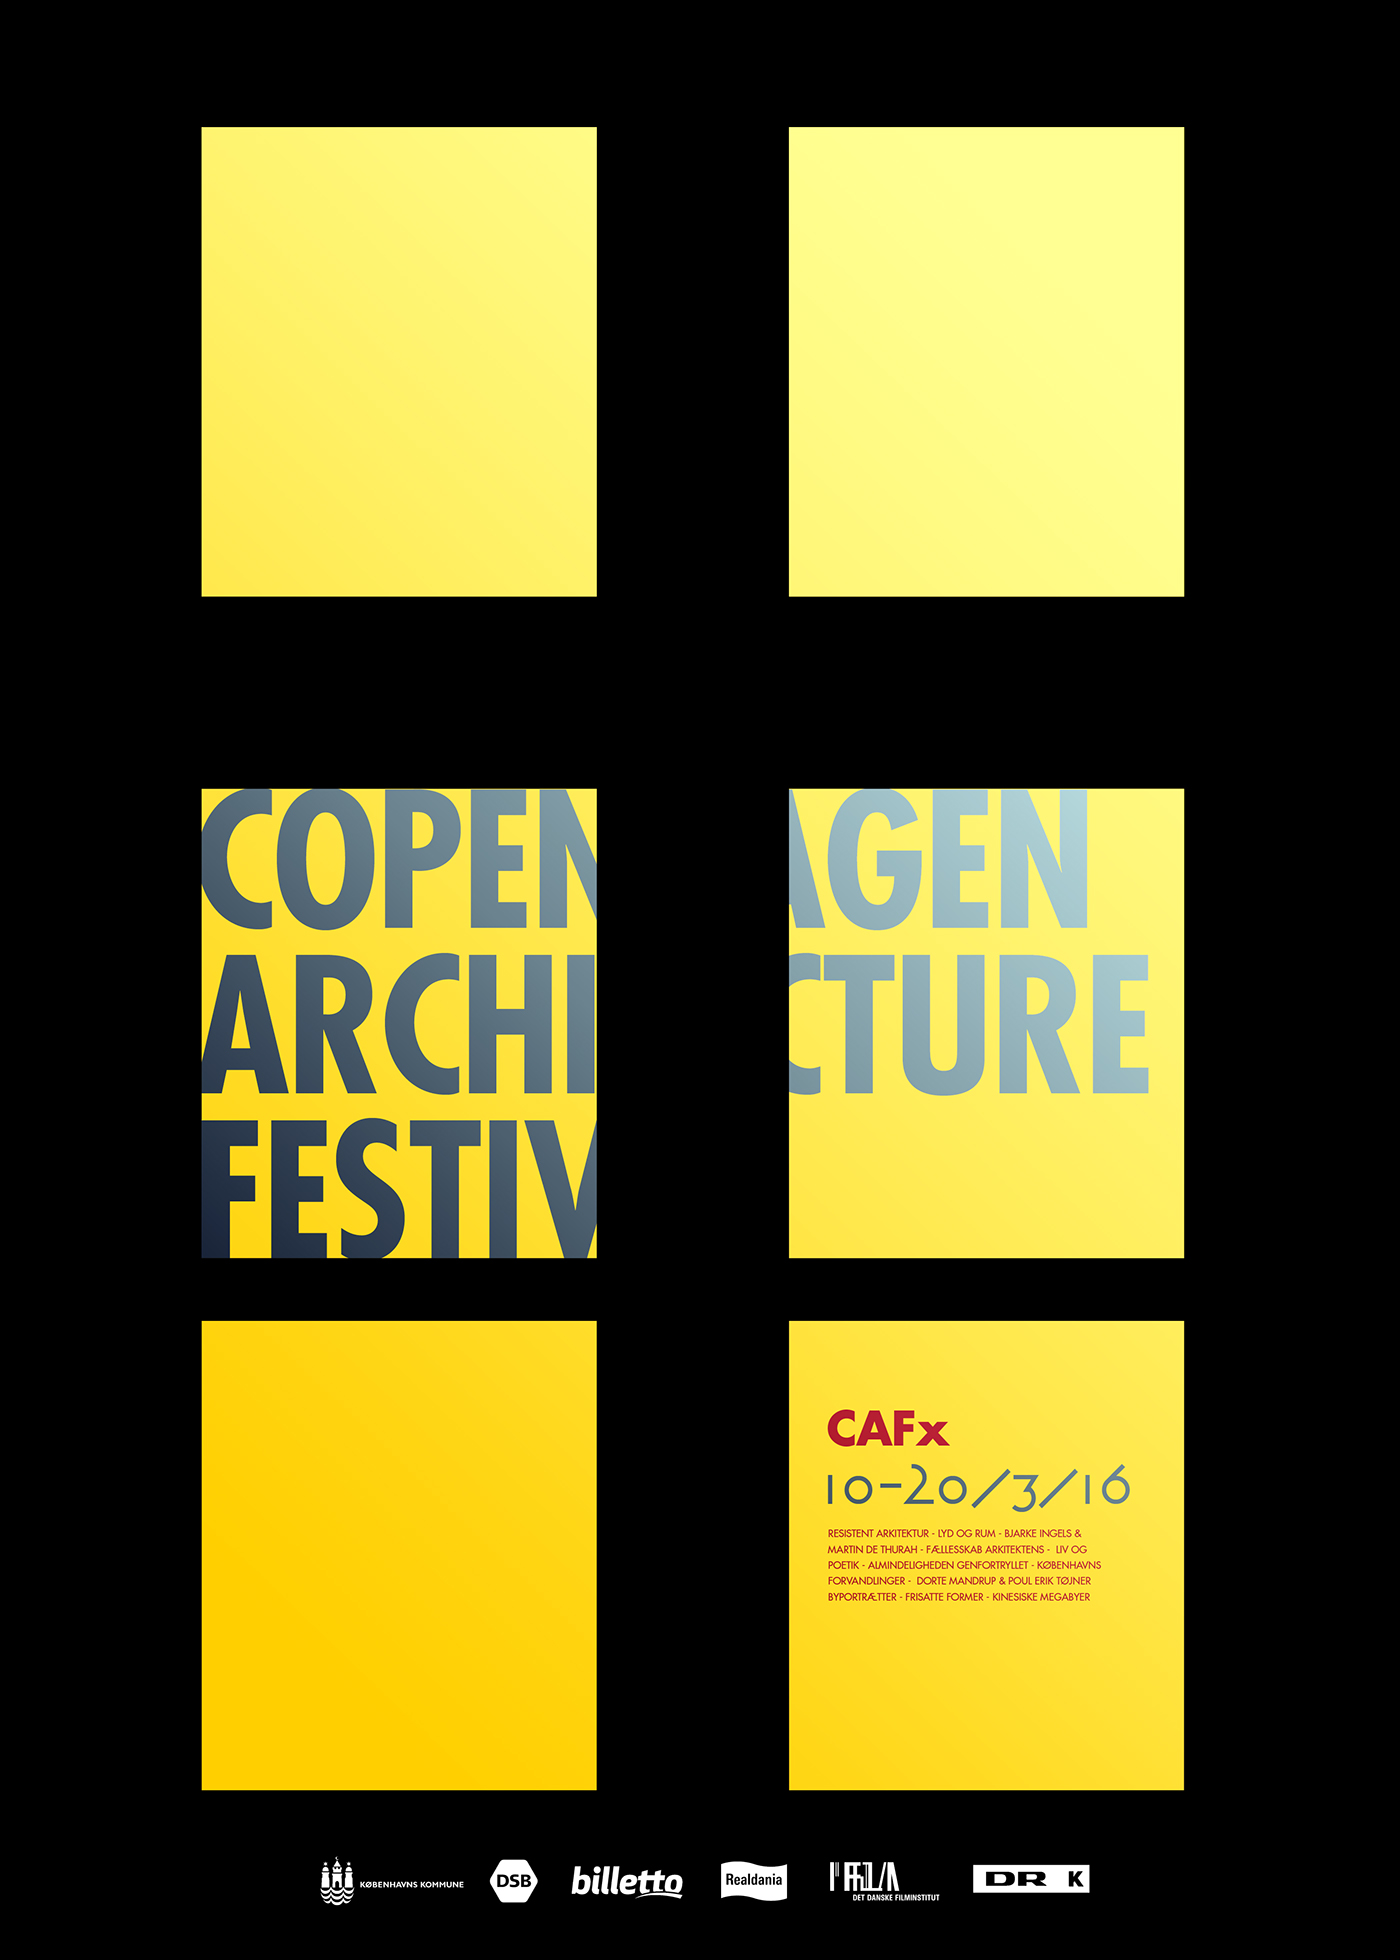 hadas zohar copenhafen festival poster denmark culture environment Street Urban light Image making Proposal dansk Danish Design